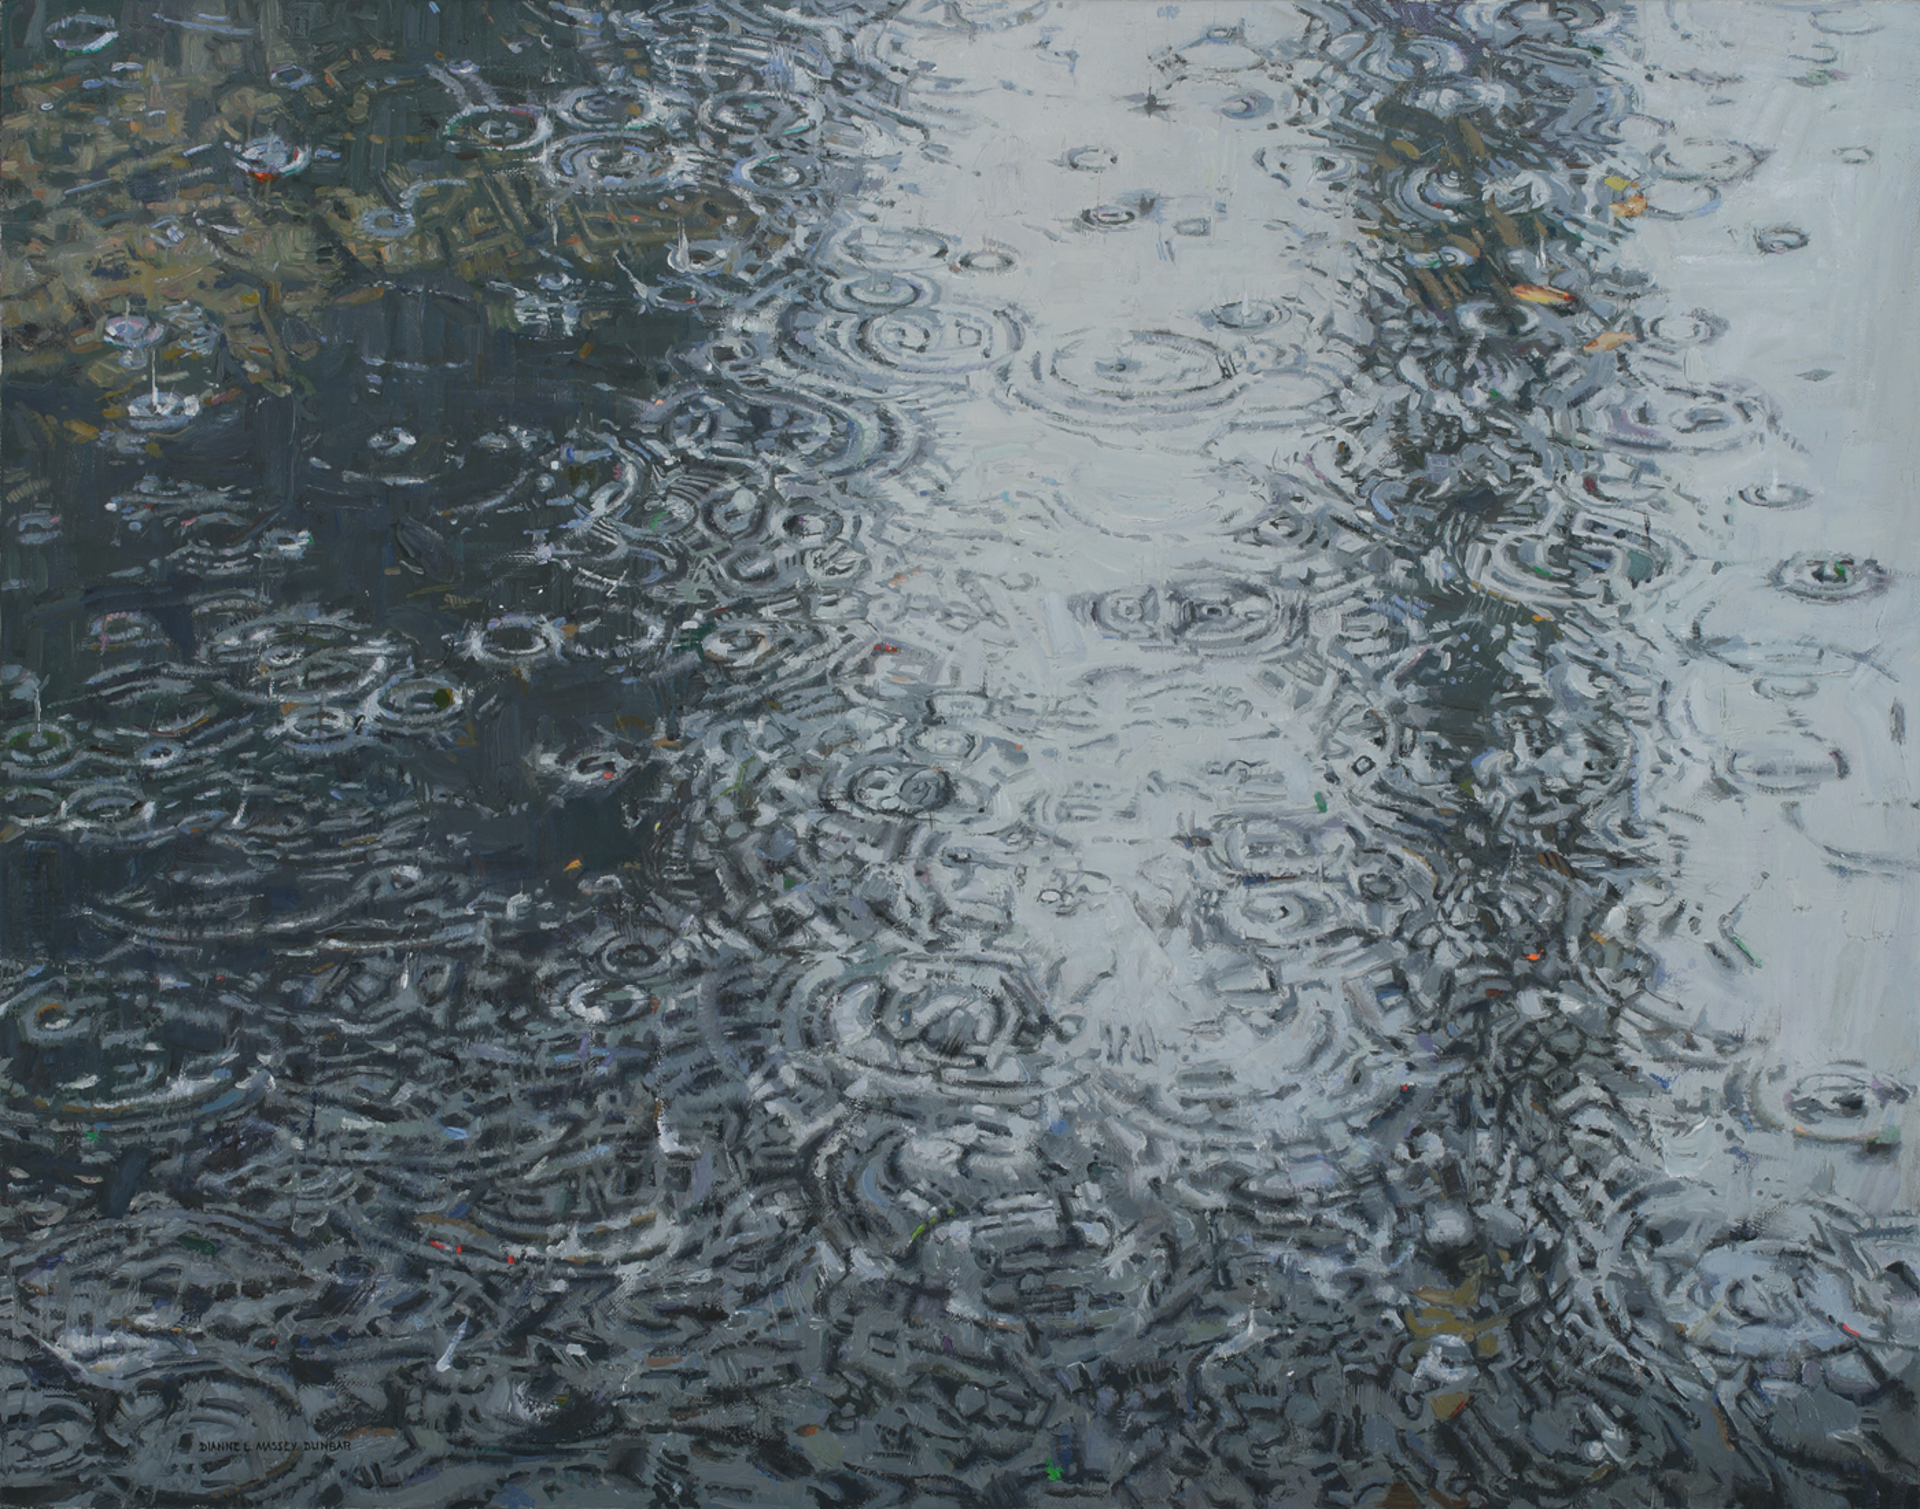 Raindrops by Dianne L Massey Dunbar